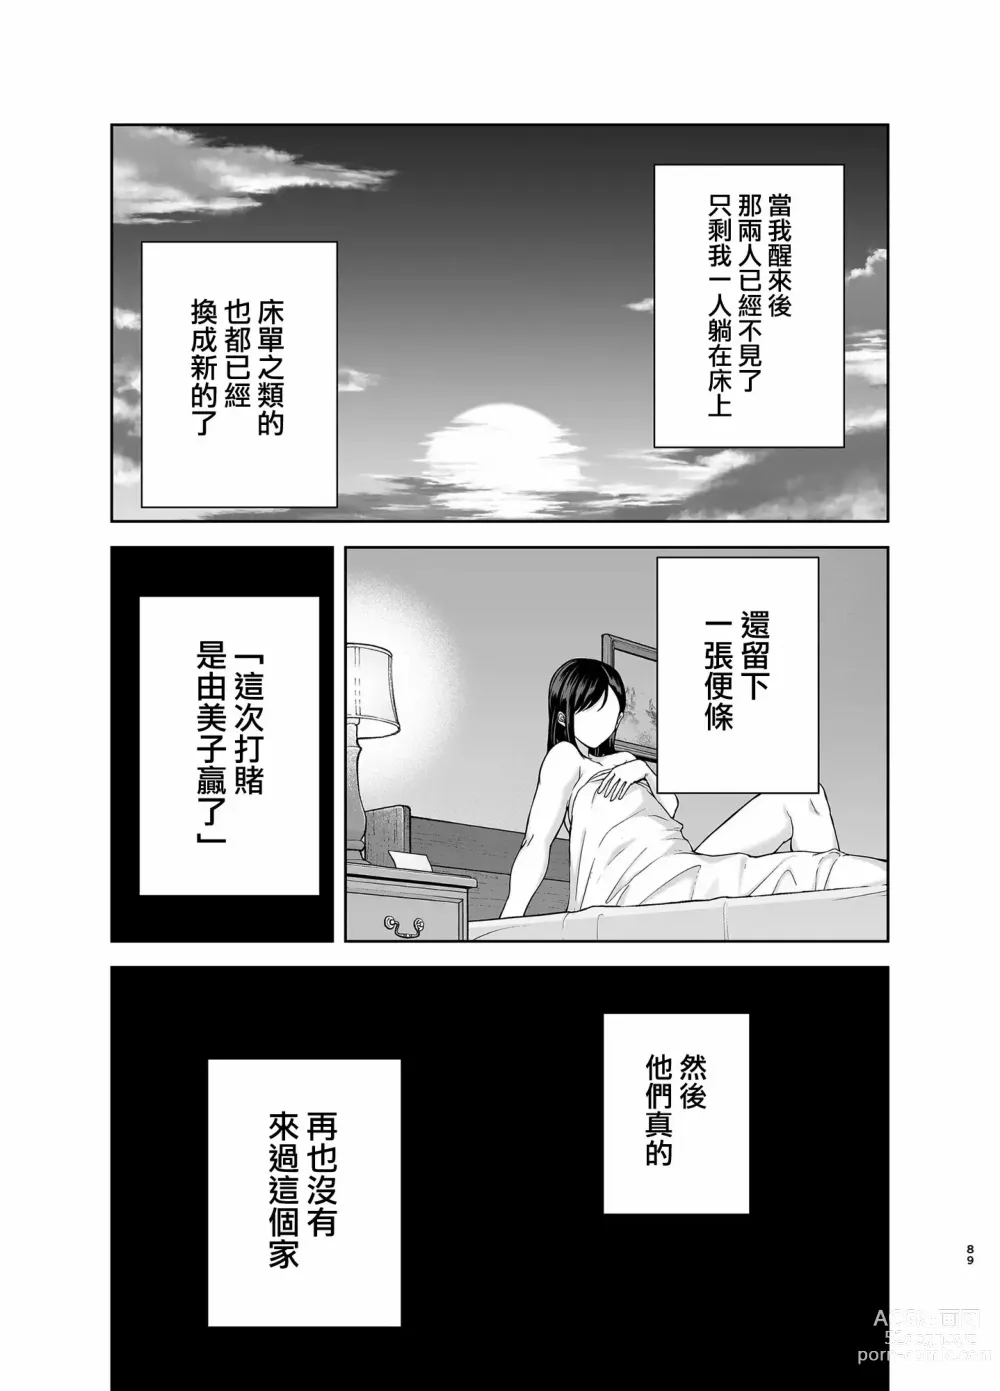 Page 192 of doujinshi Natsuzuma 1+2